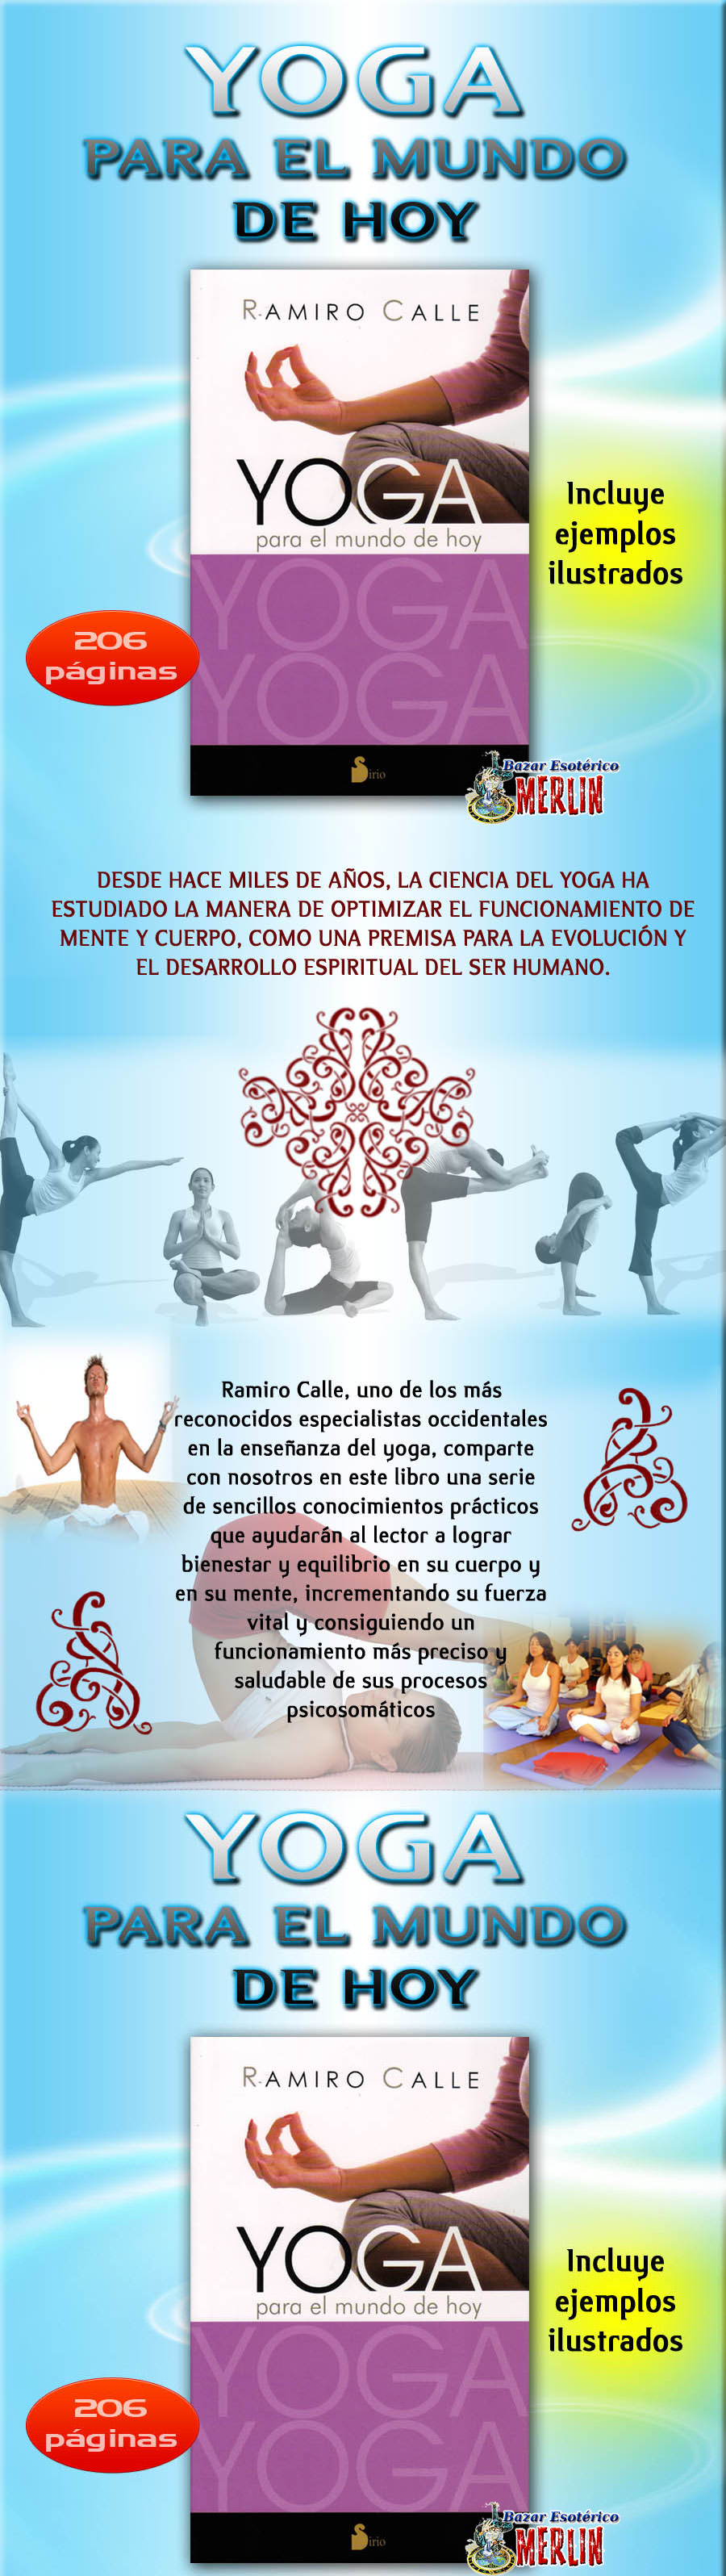 yoga_parael_mundo_de_hoy_diseno